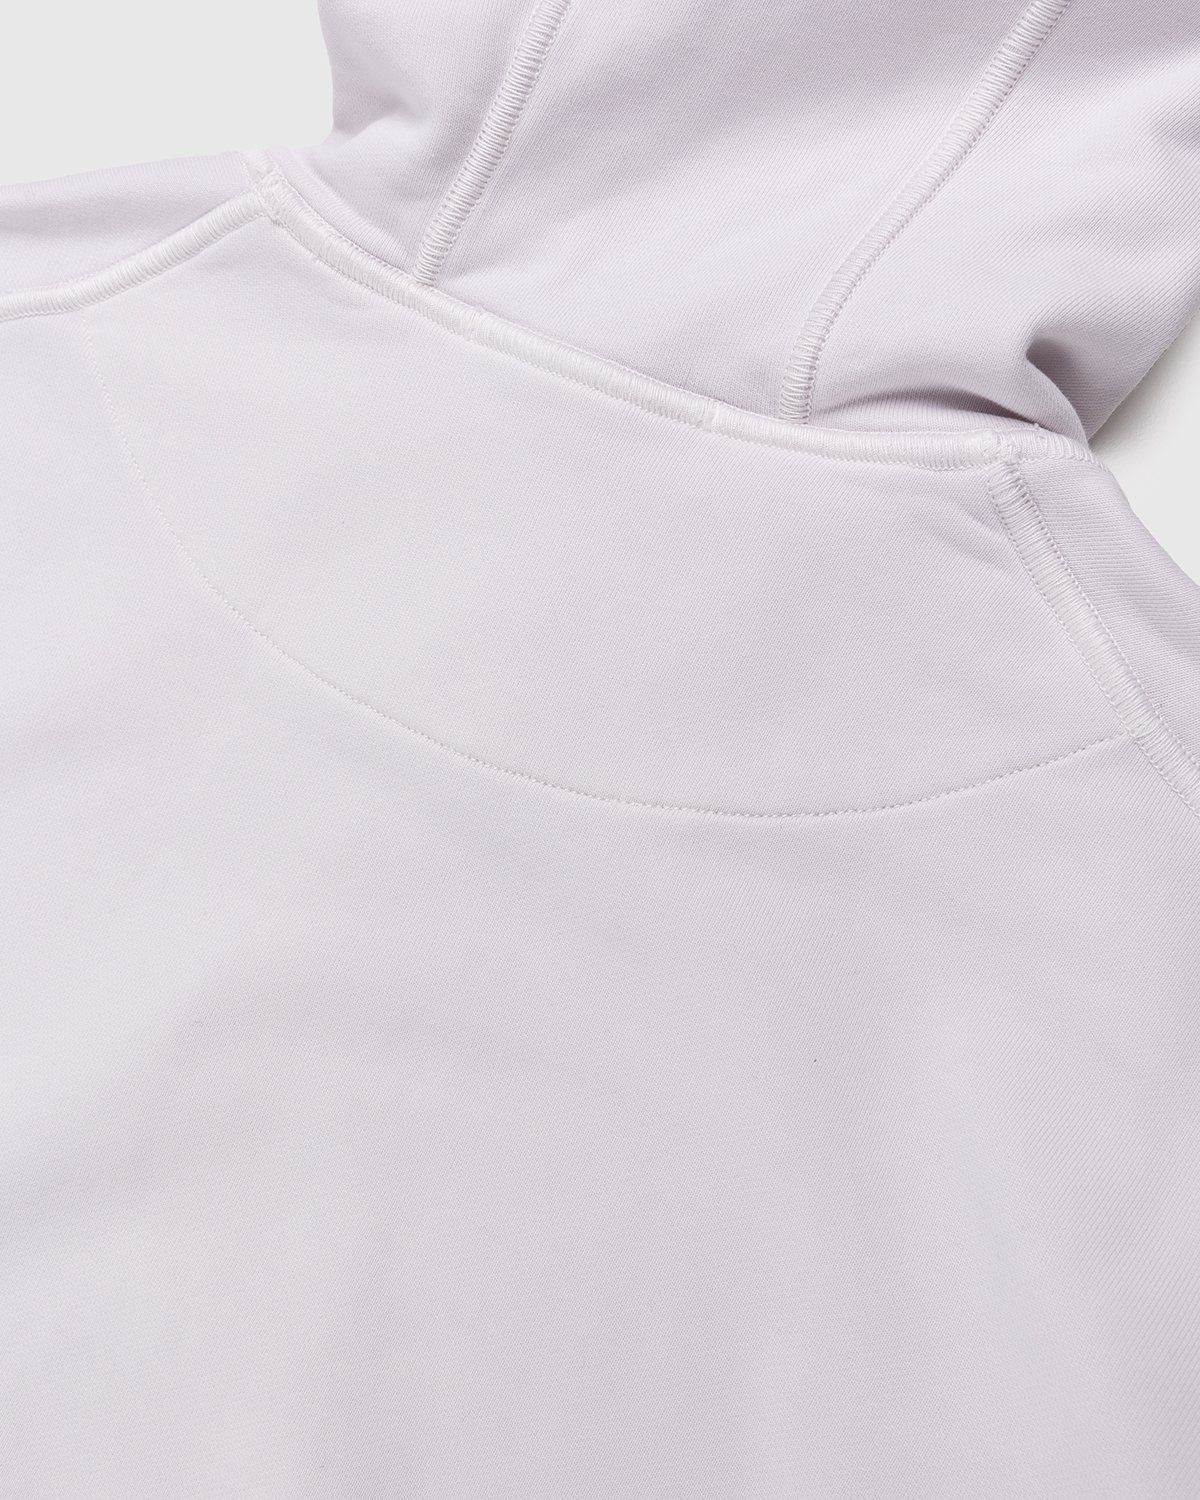 Stone Island - 64151 Garment-Dyed Cotton Fleece Hoodie Pink - Clothing - Pink - Image 3